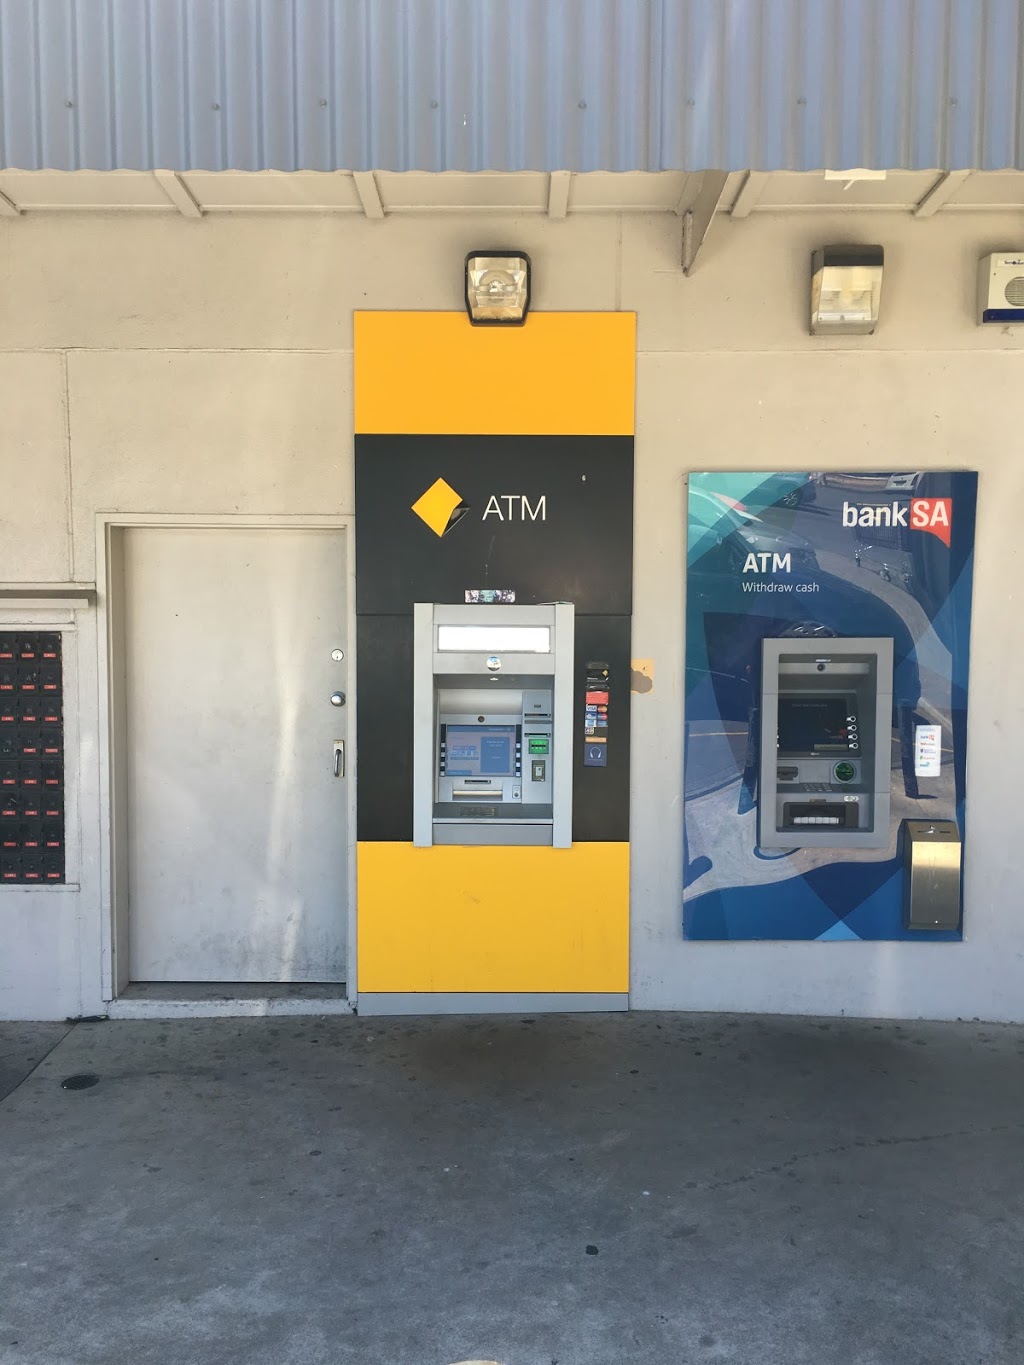 CBA ATM-Clovercrest Shop Centre (Cnr Montague Rd & Kelly Rd) Opening Hours